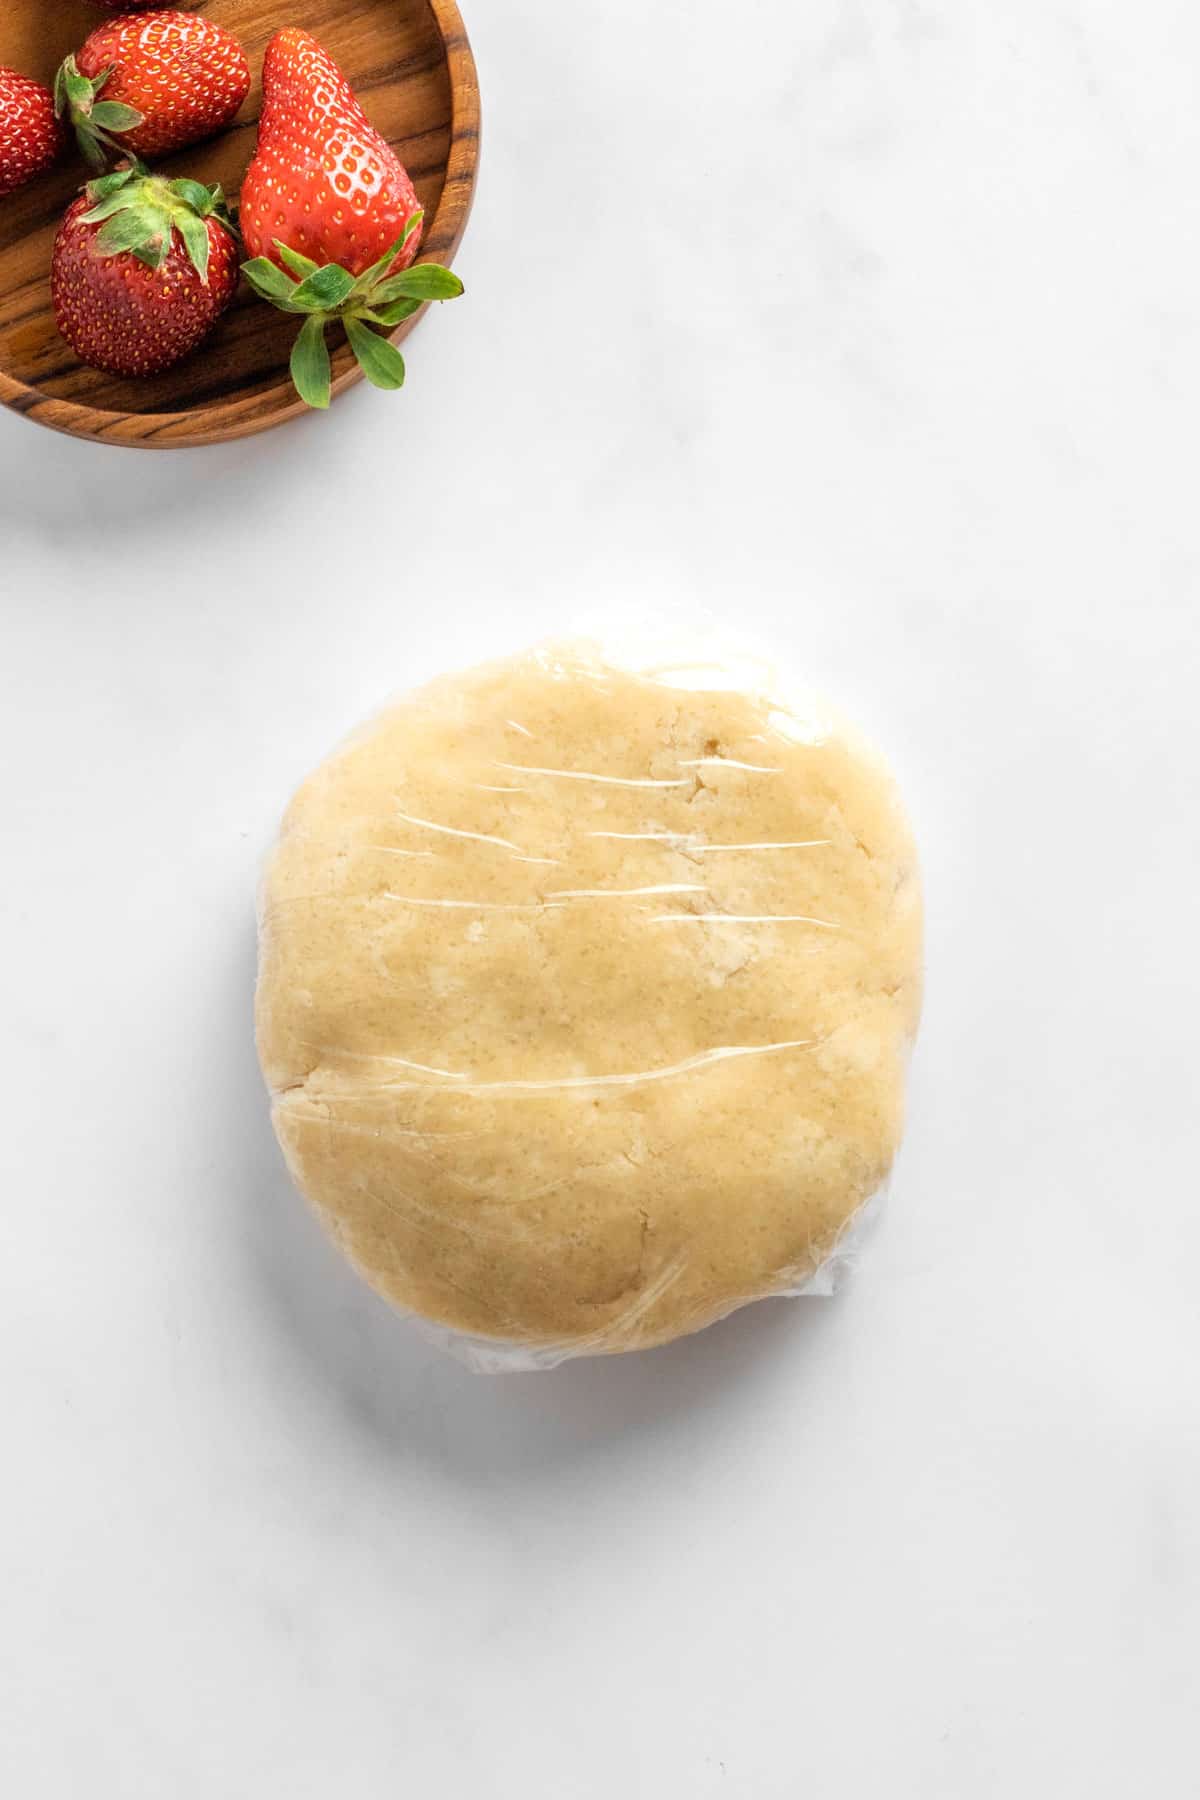 galette dough ball